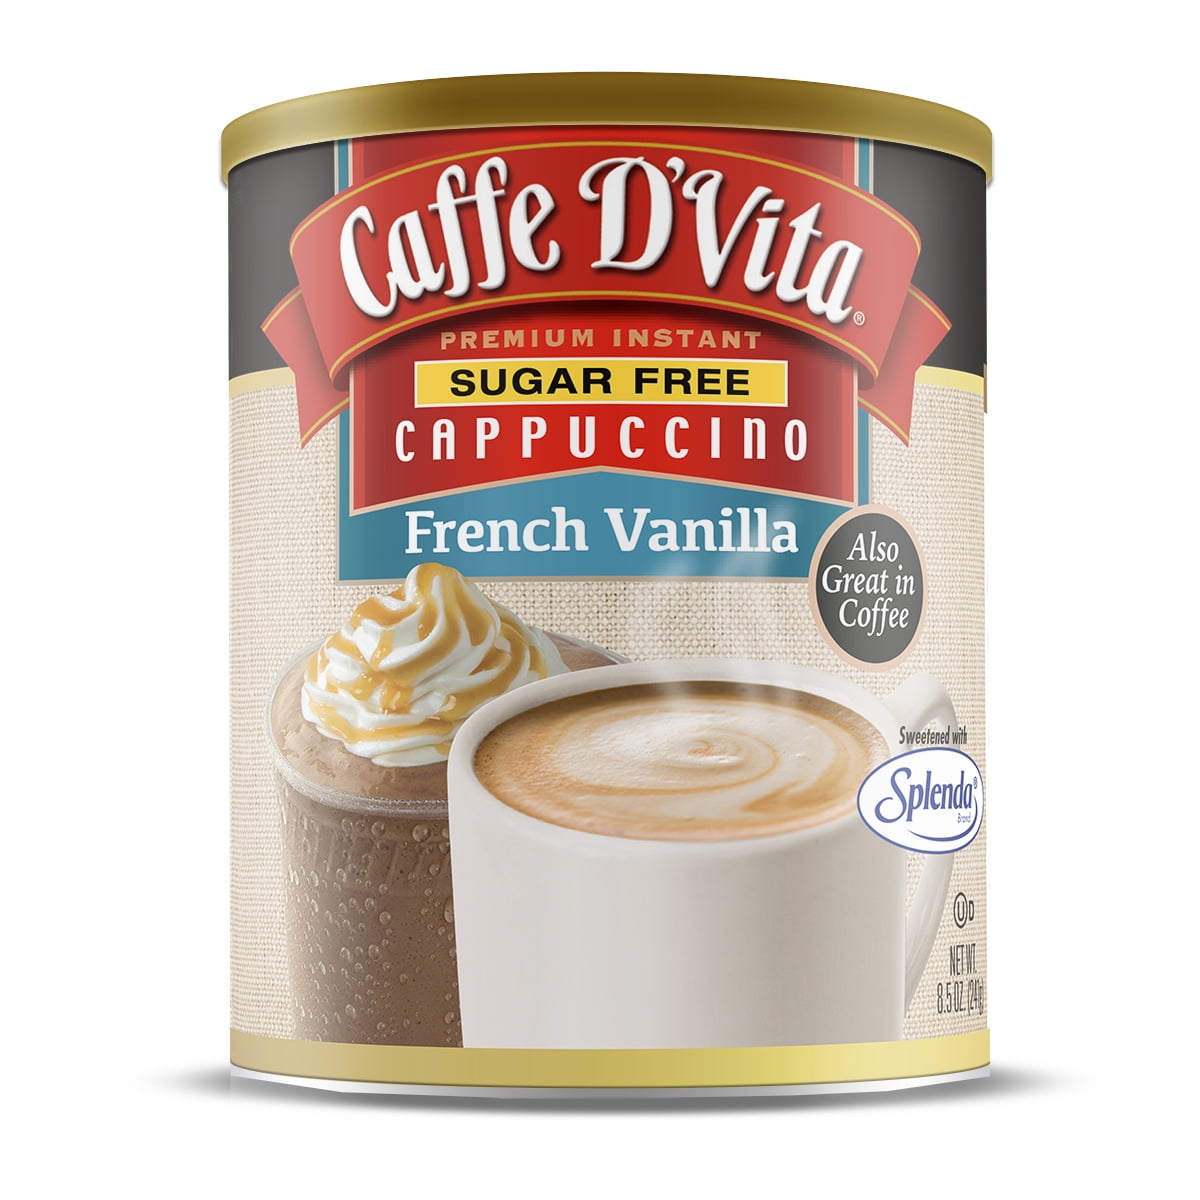 La Dolce Vita Cappuccino Cups - Set of 12 - Free Shipping